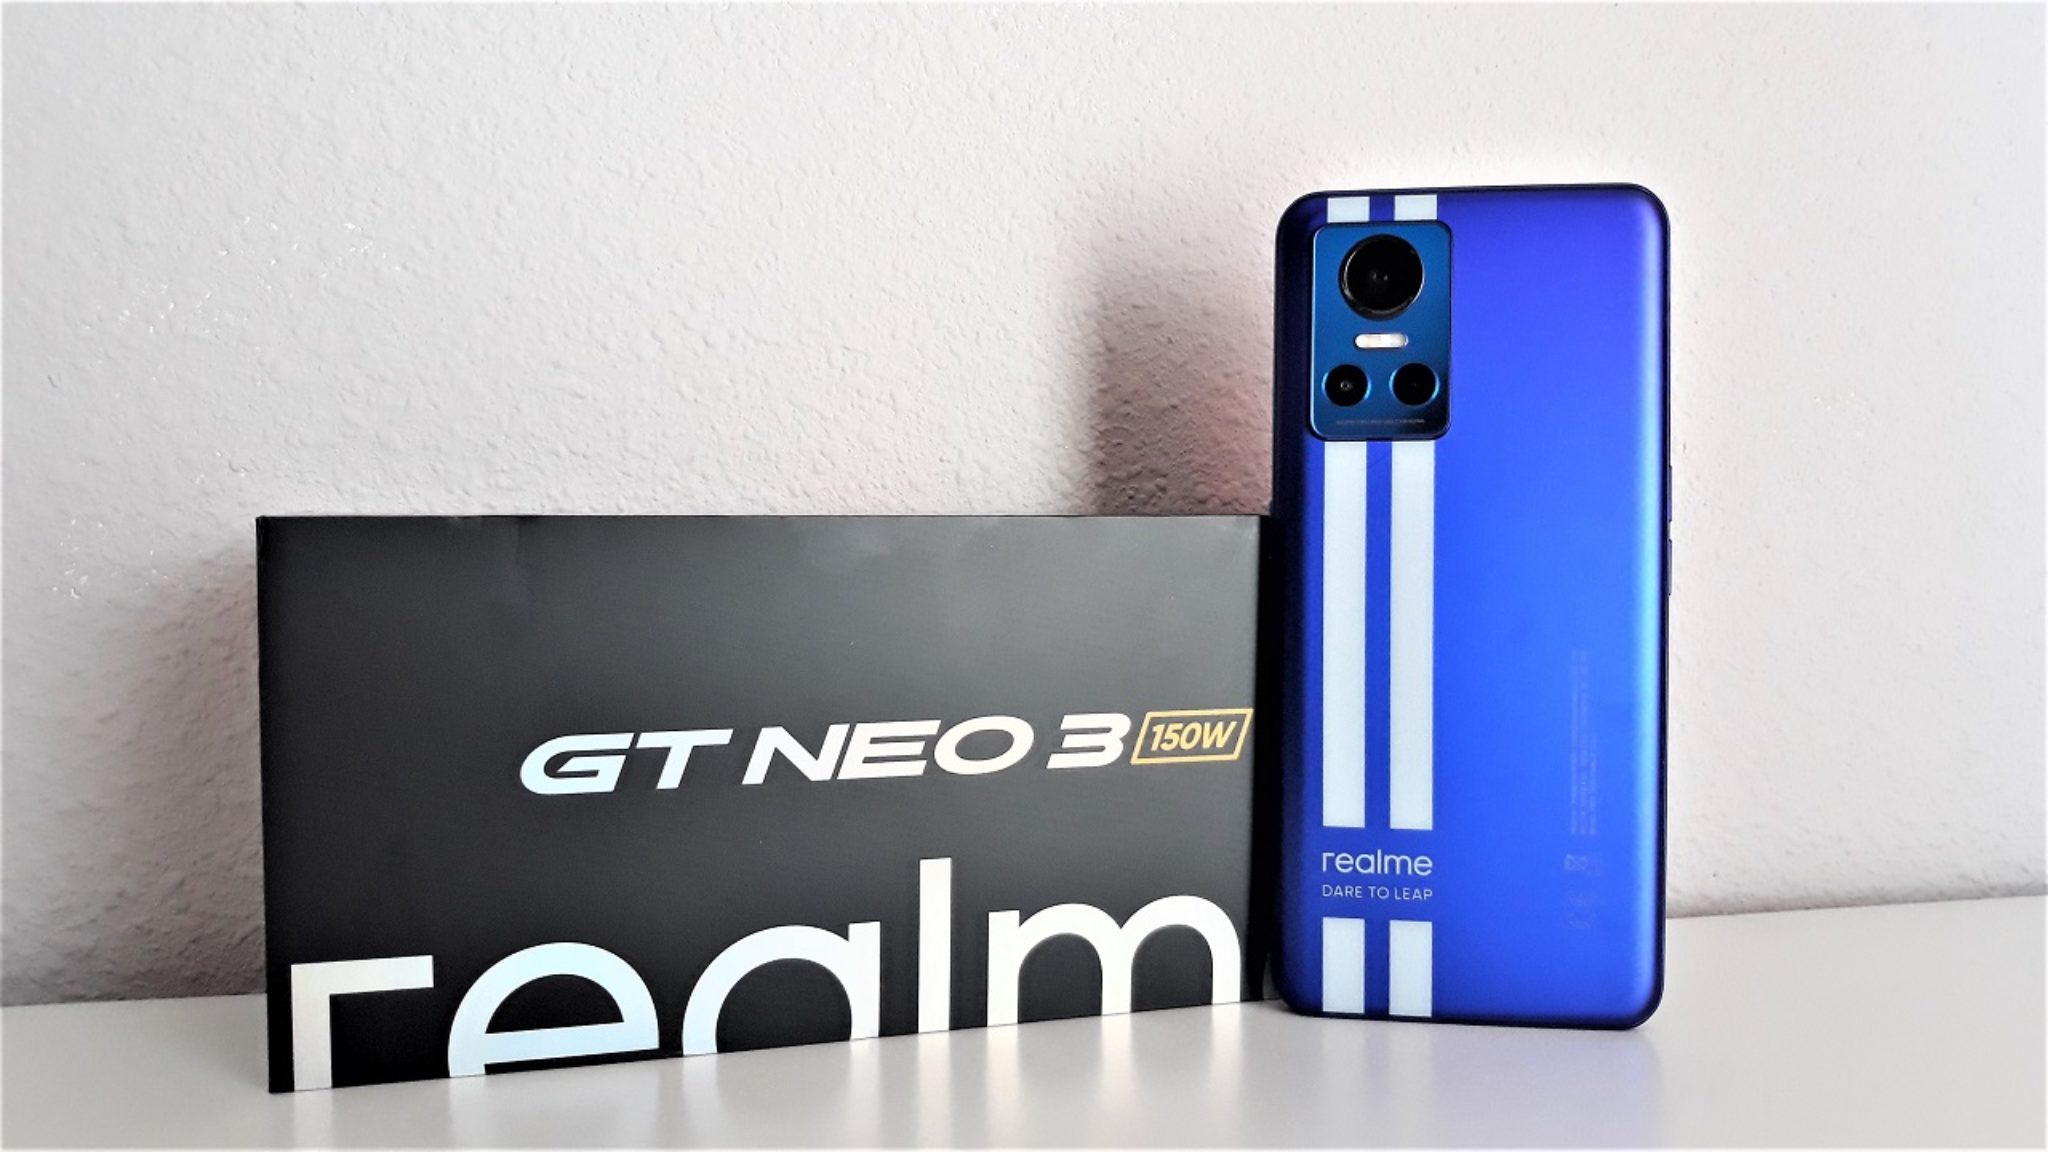 Realme GT NEO 3 150W, probamos este espectacular móvil de gama alta